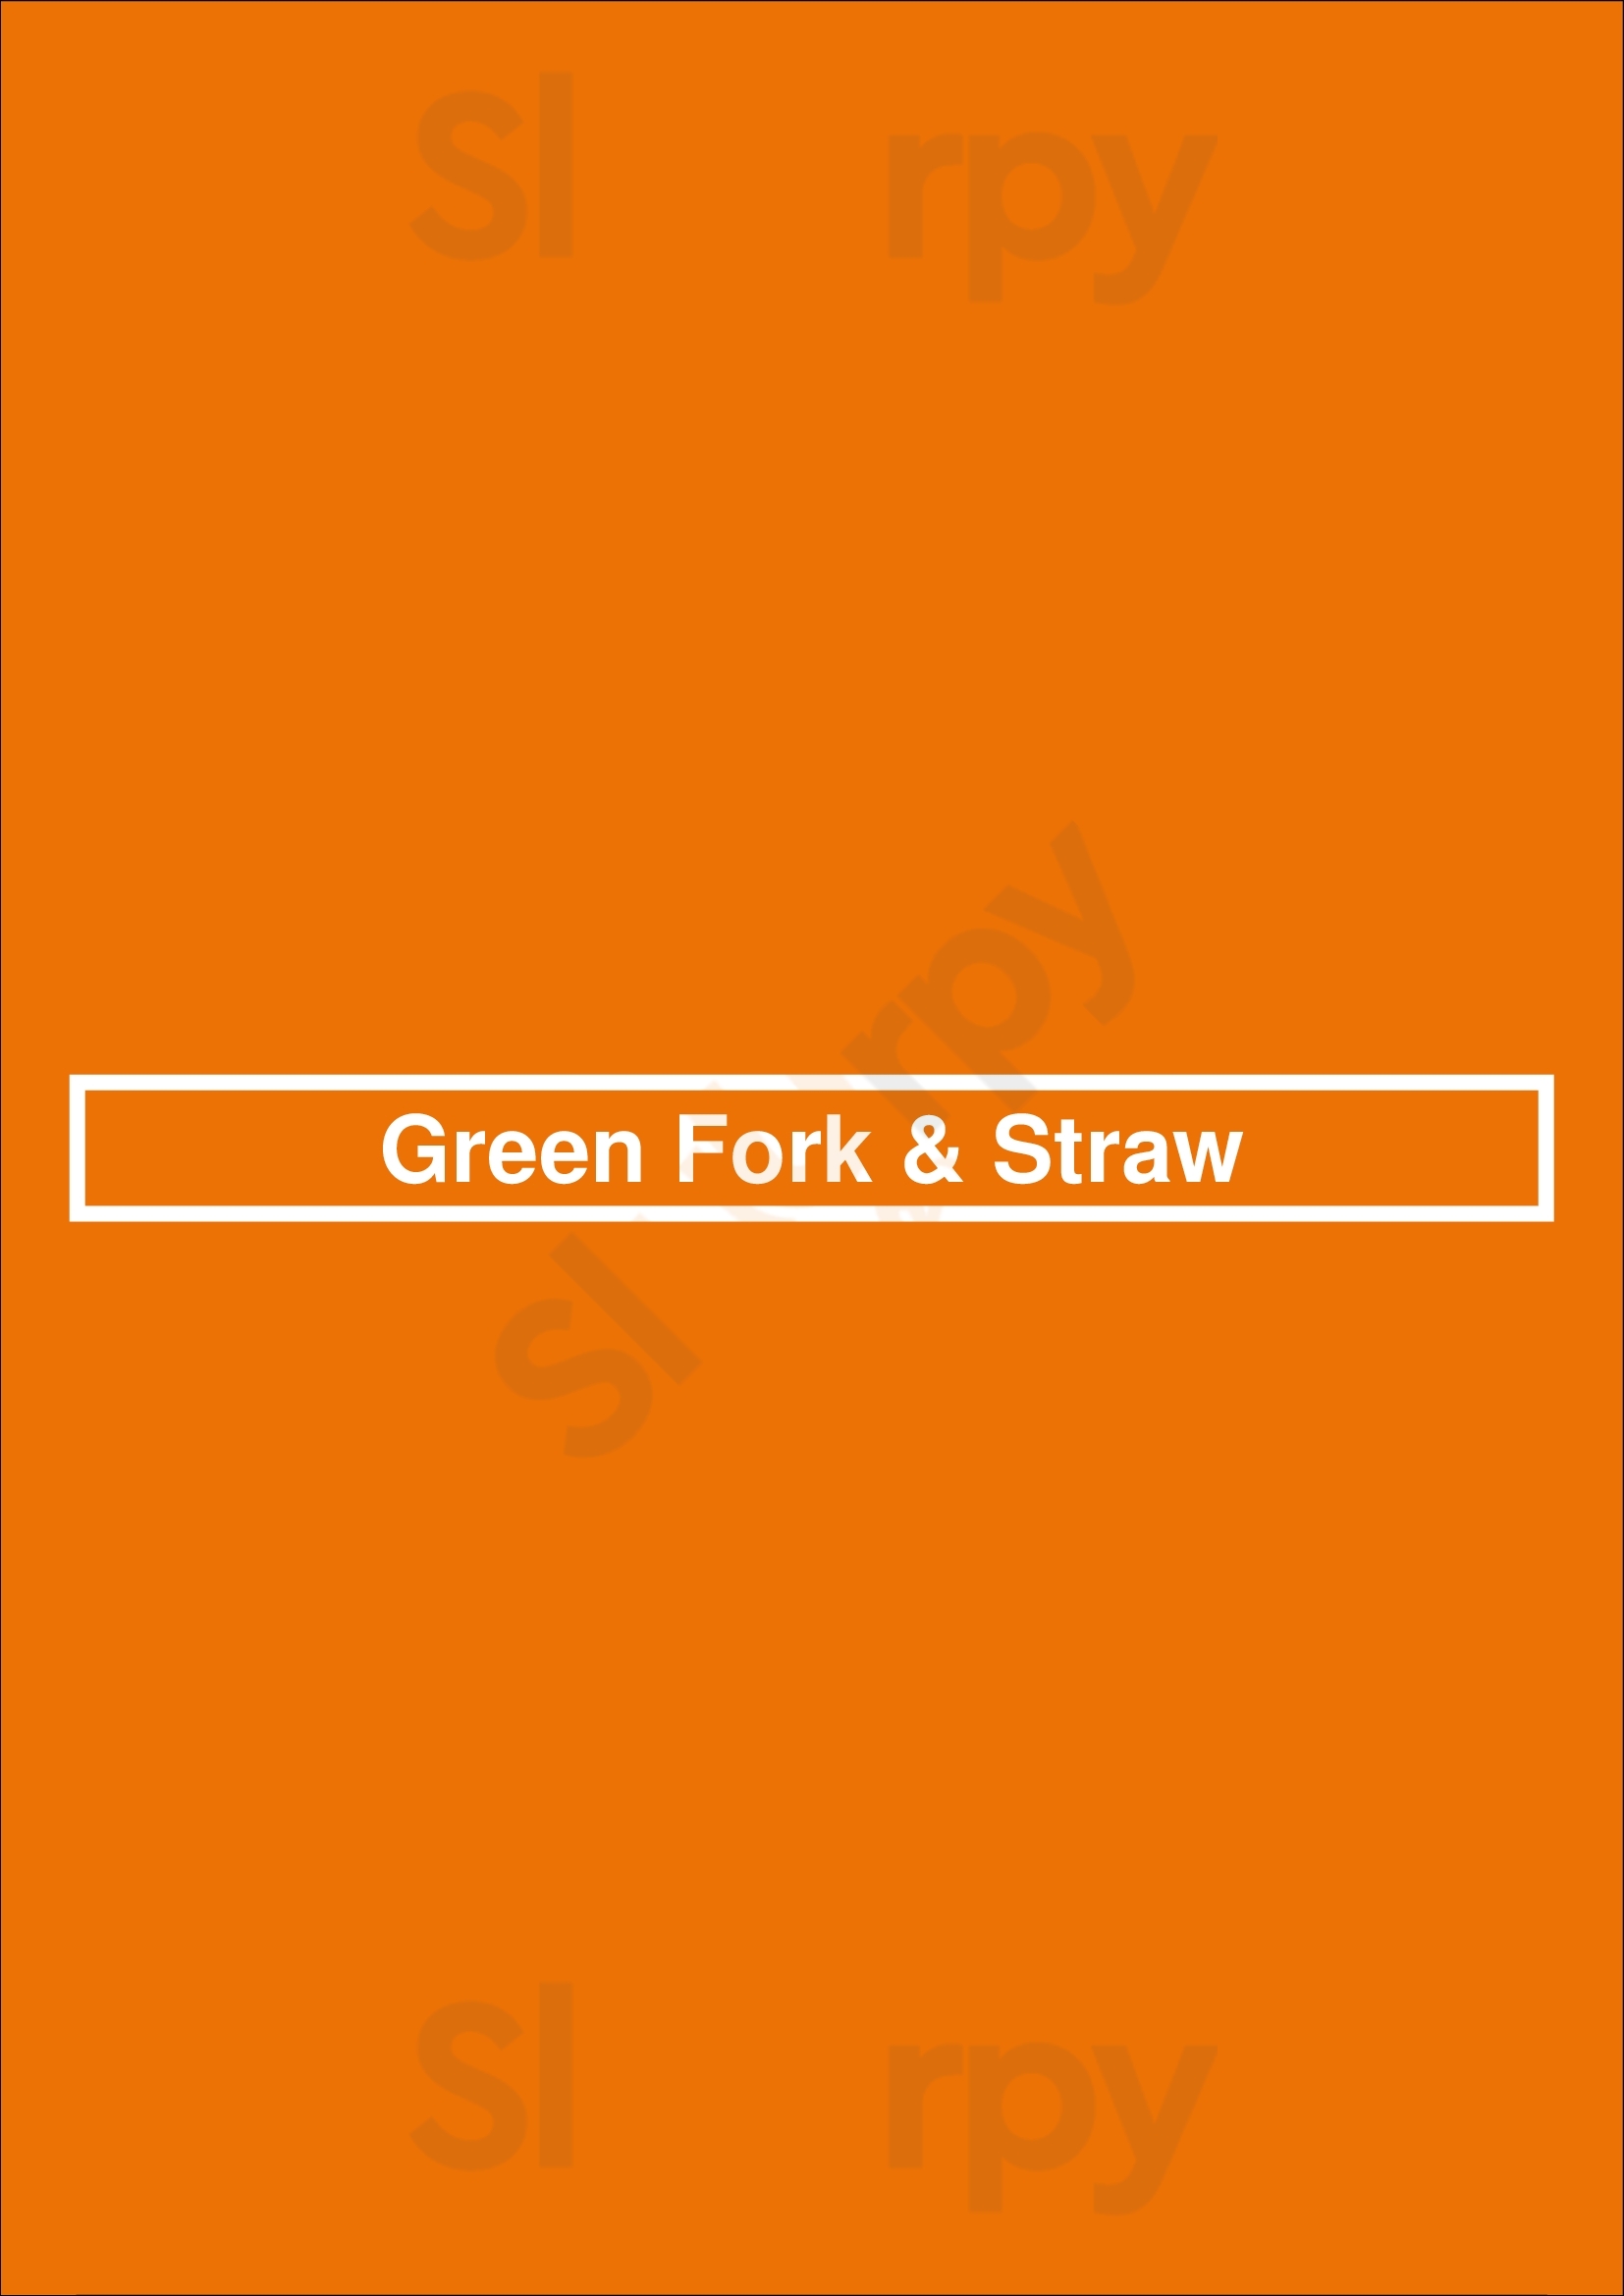 Green Fork & Straw Houston Menu - 1